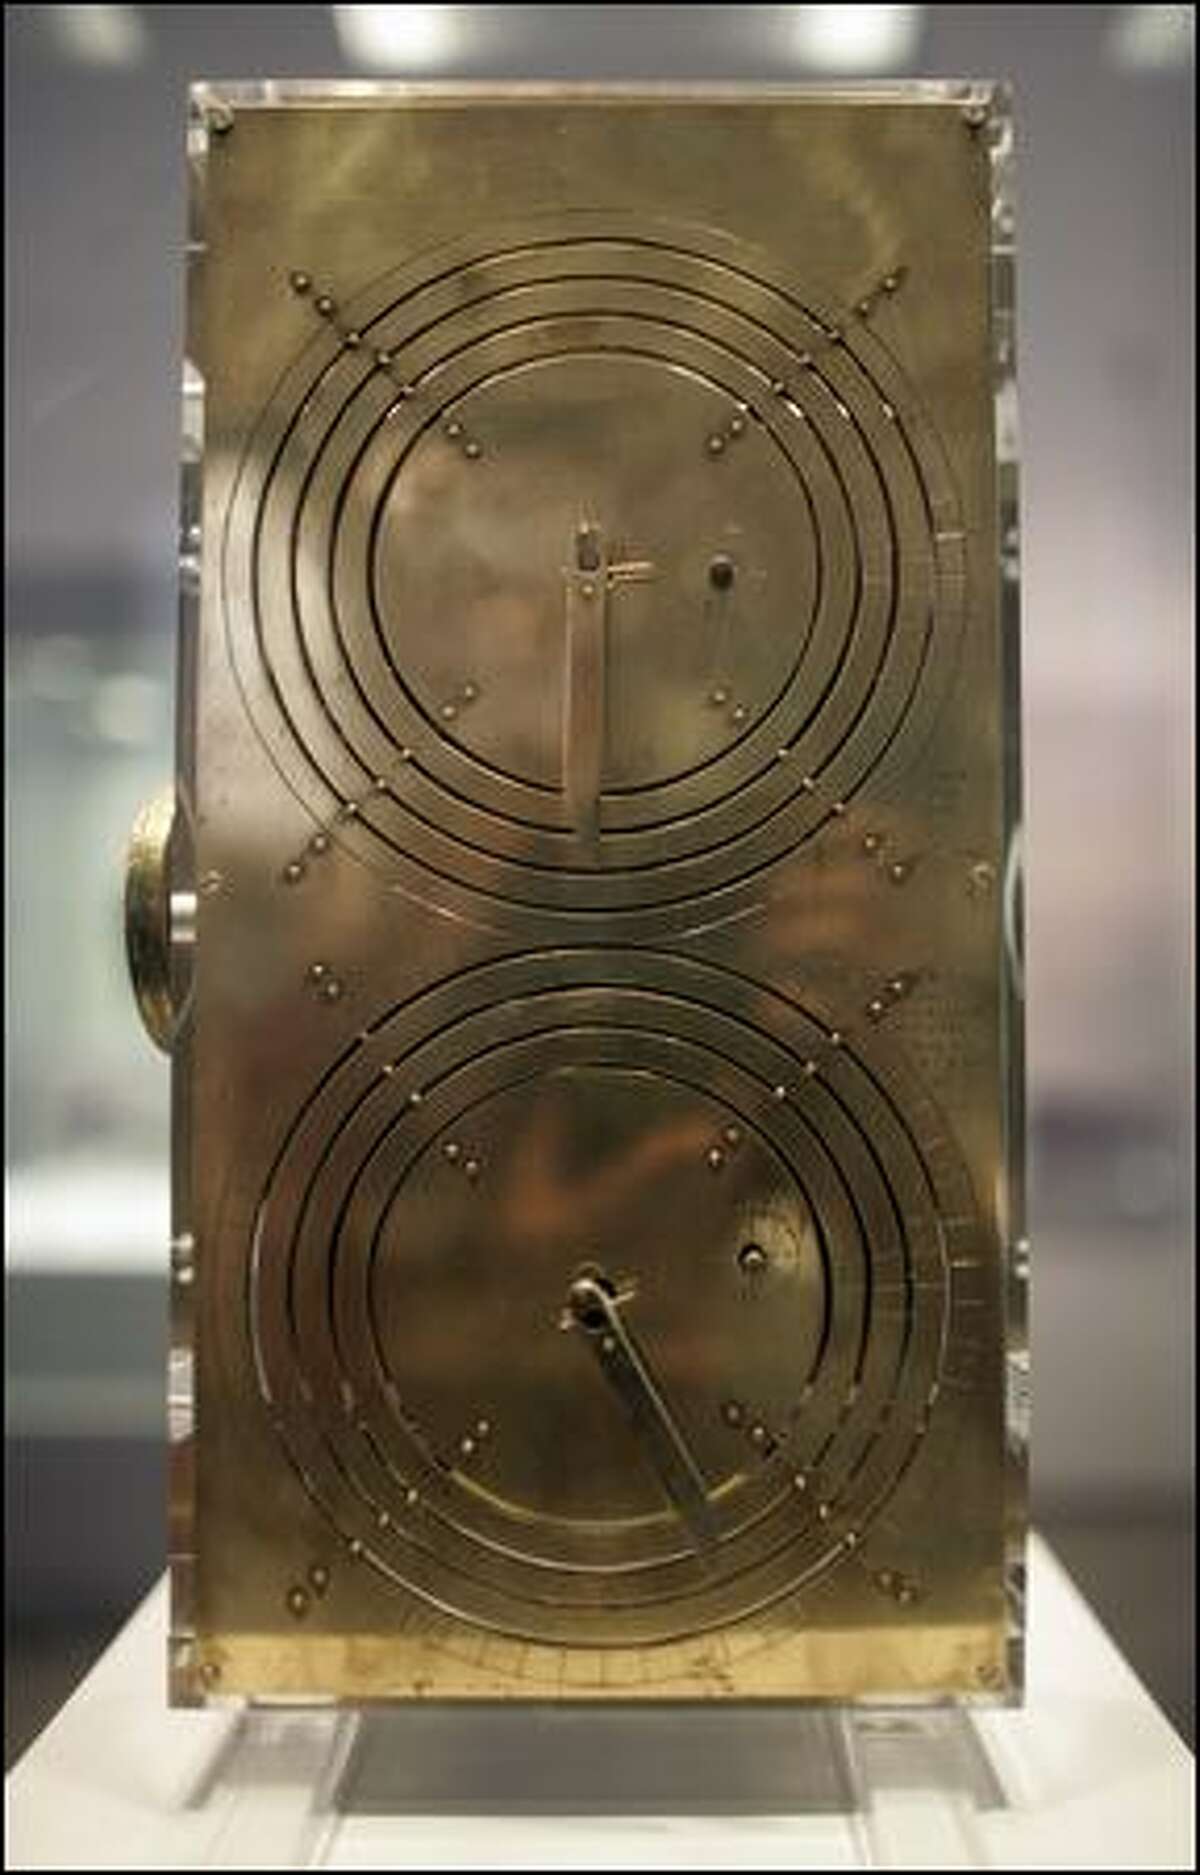 An Ancient Calculator Tracked Original Olympics